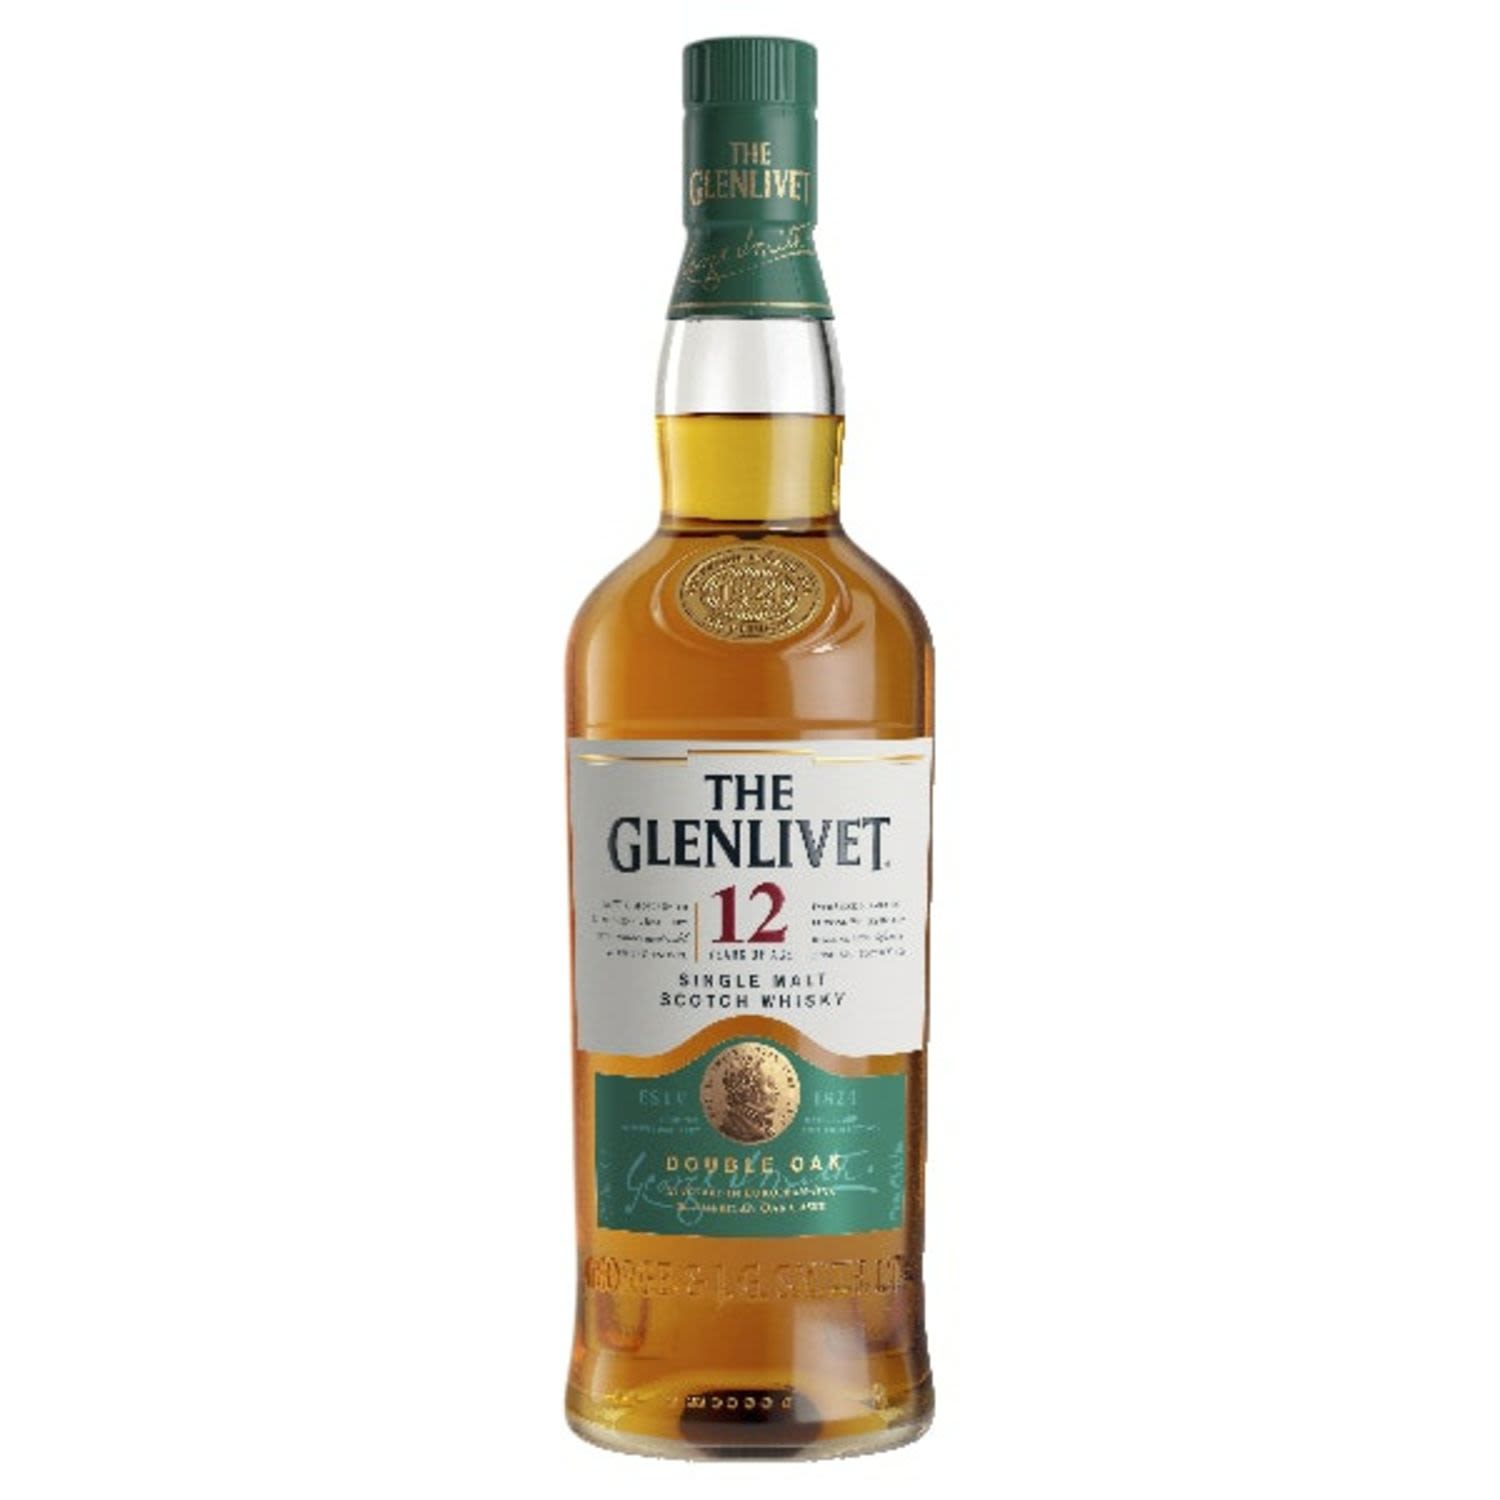 The Glenlivet 12 Year Old Single Malt Scotch Whisky 700mL Bottle